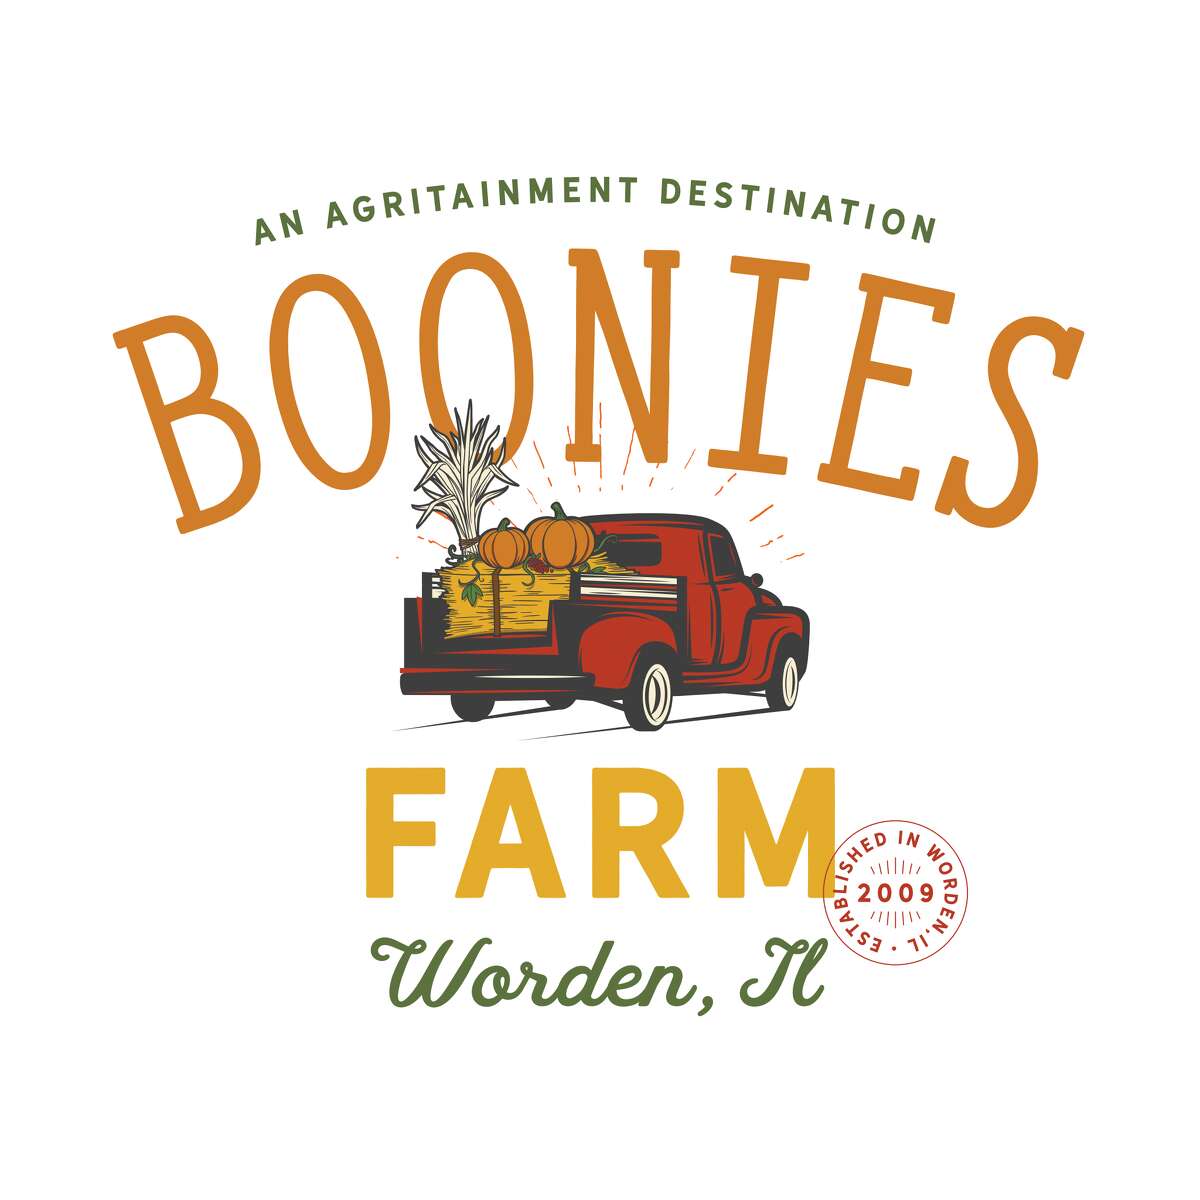 Boonies Farm